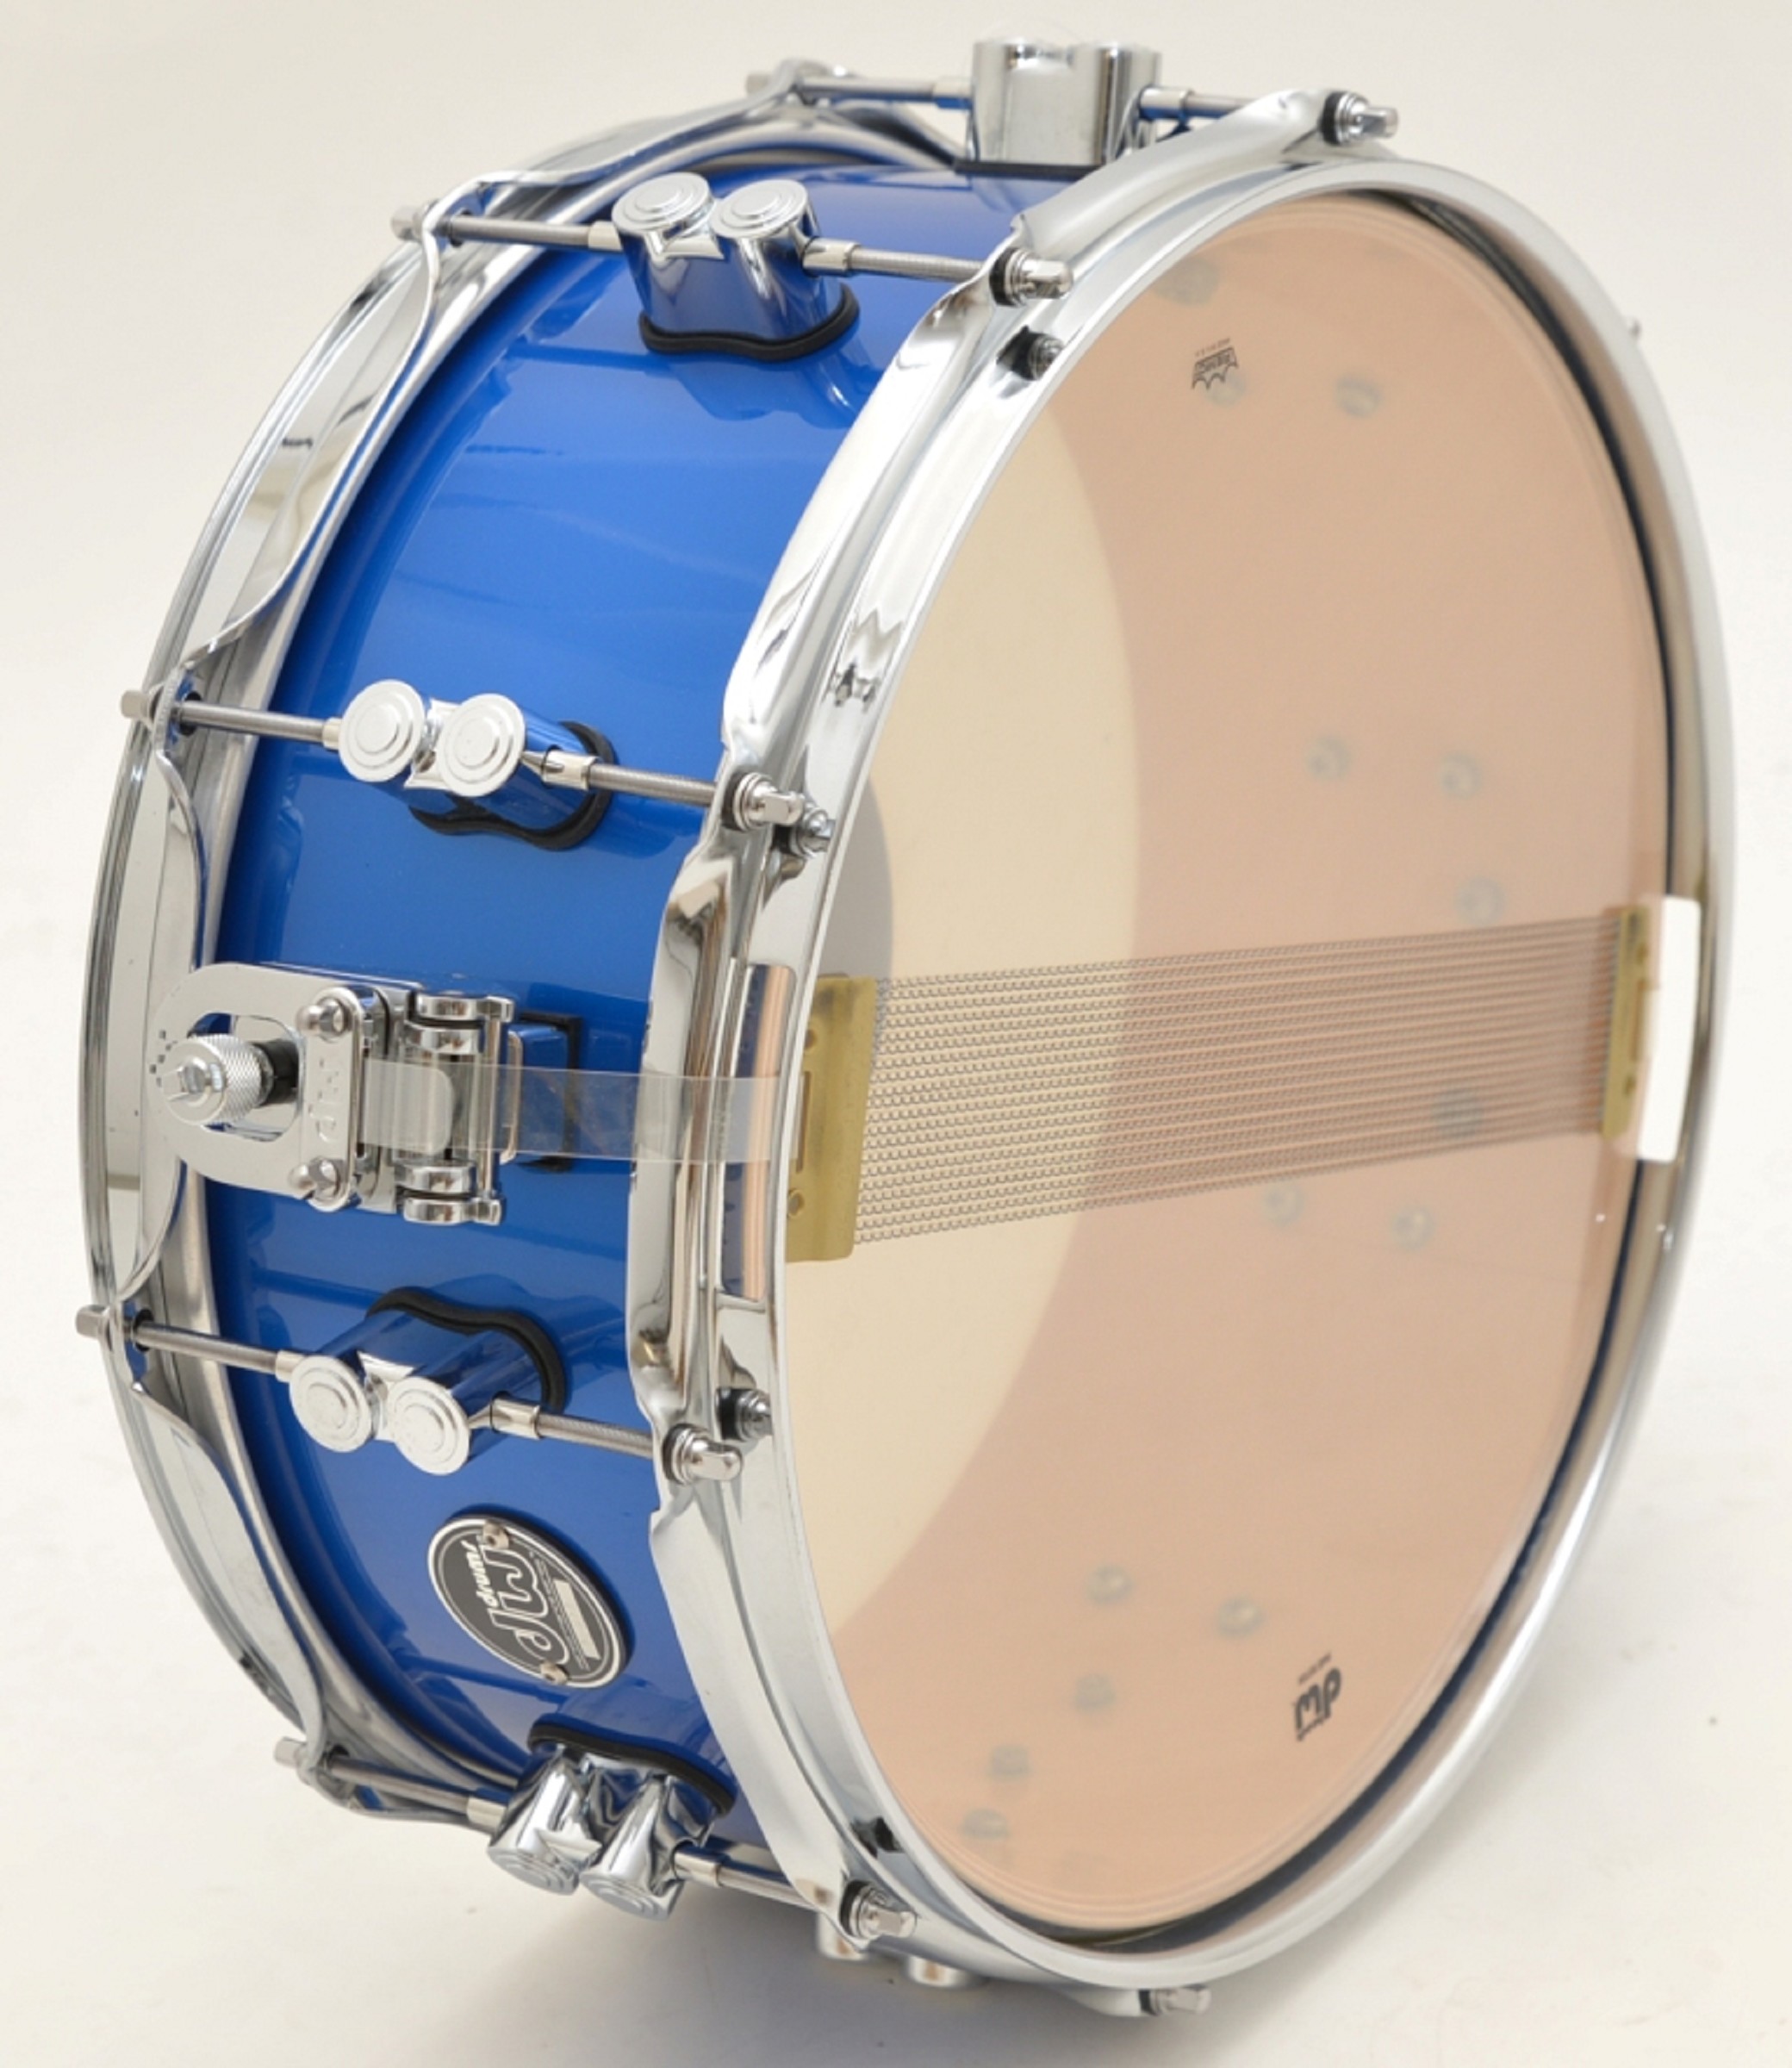 dw Performance 14x5,5 Snare Sapphire Blue